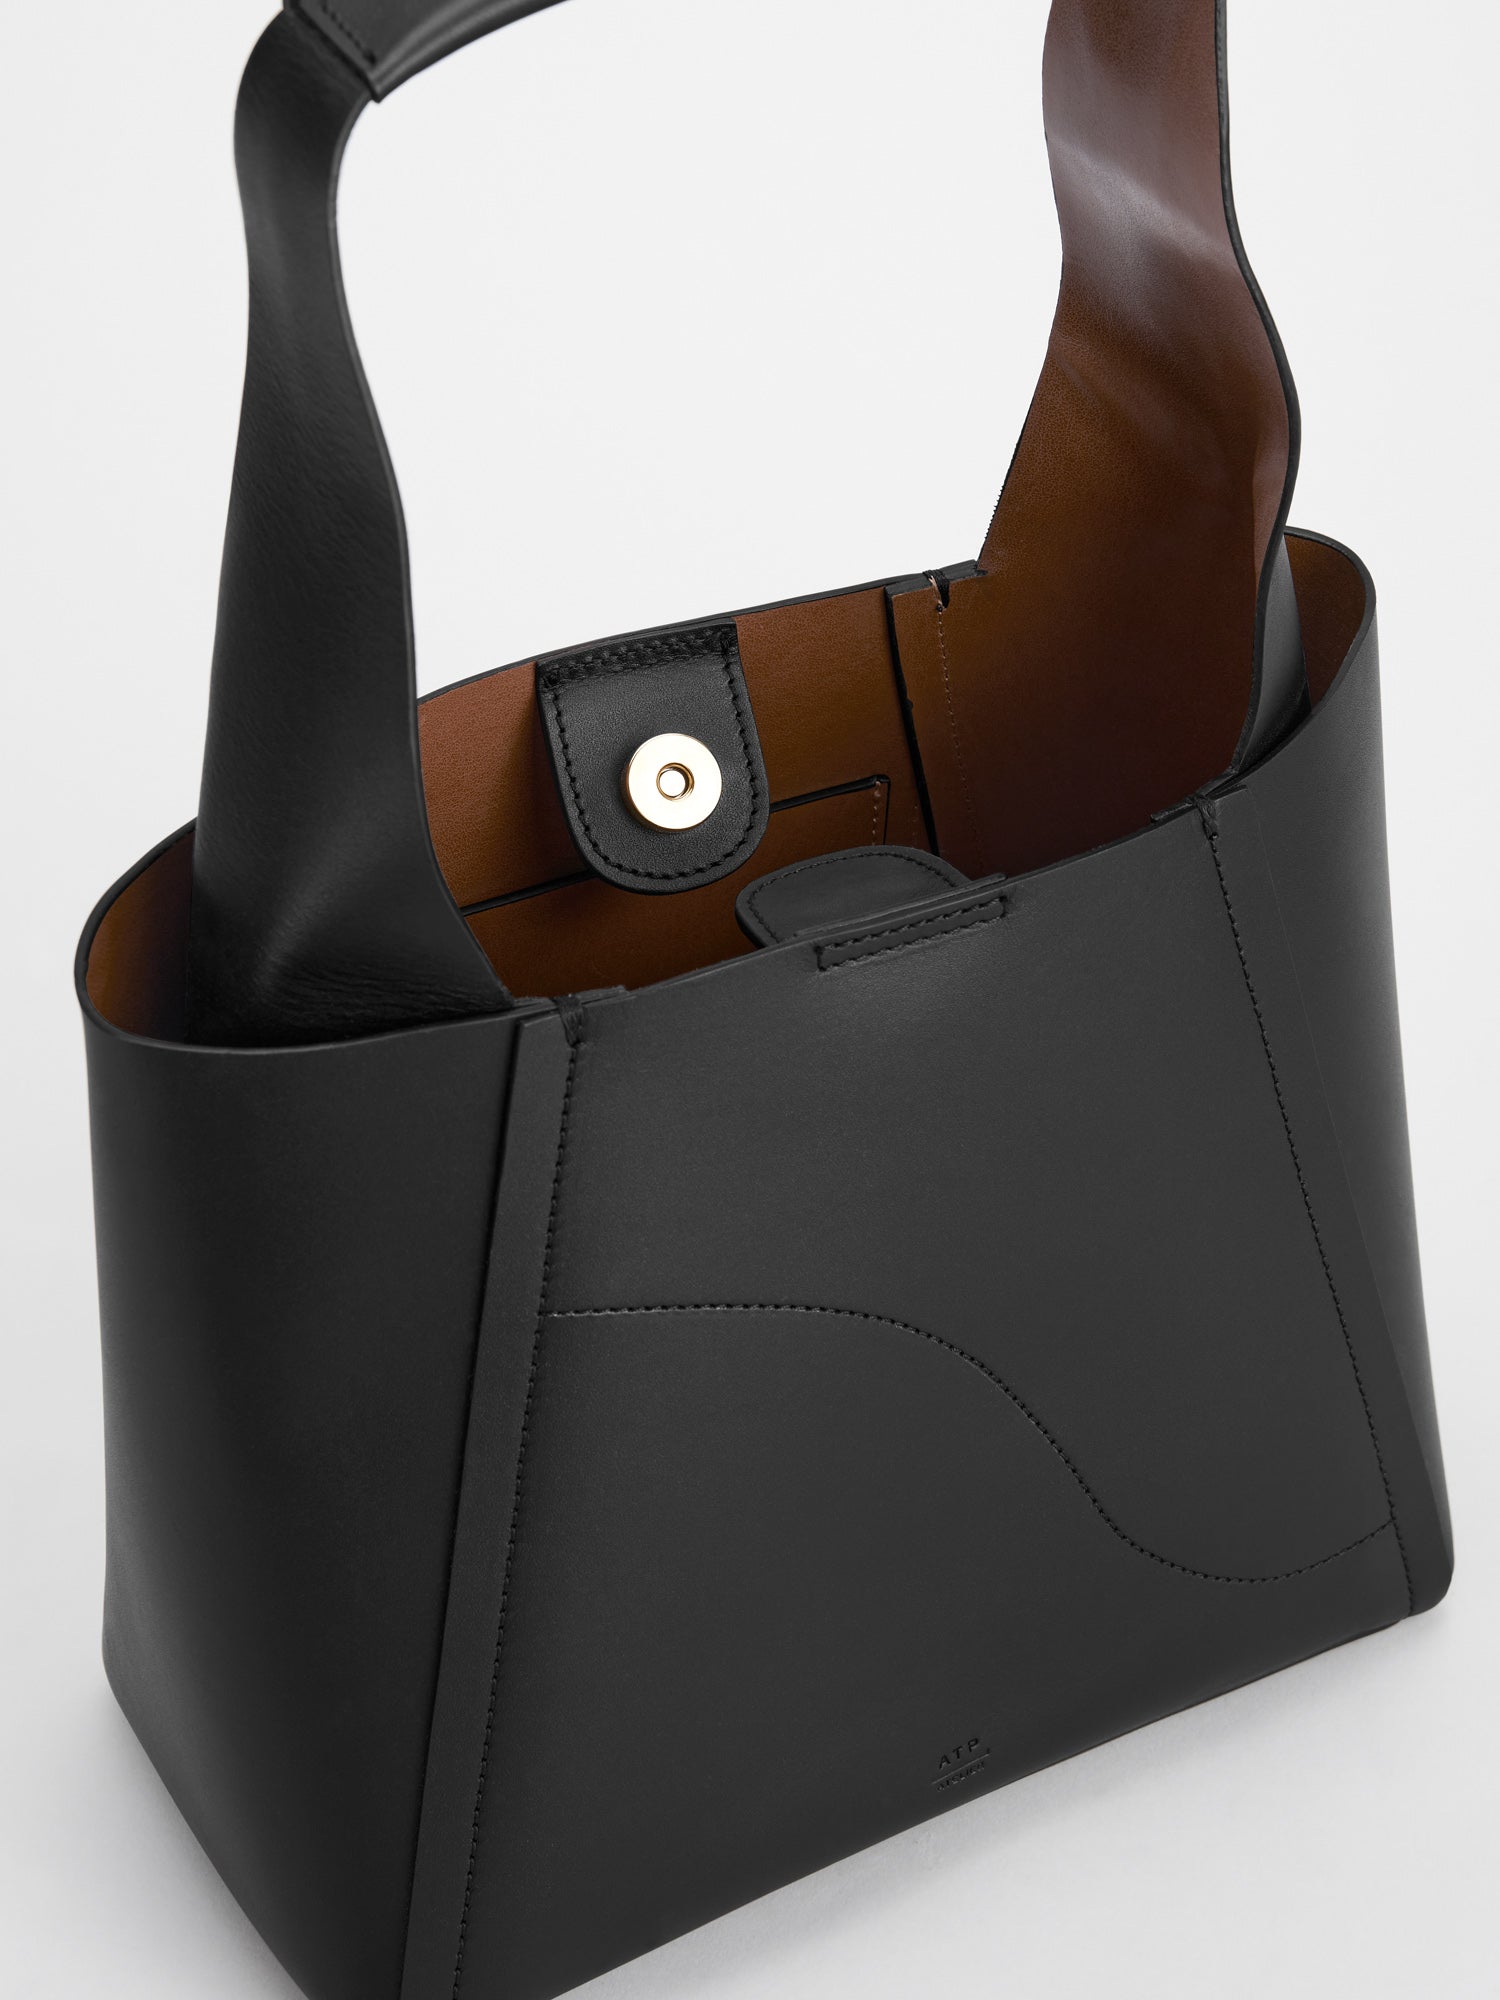 12 Best Lightweight Handbags for Comfort  Style  LoveToKnow